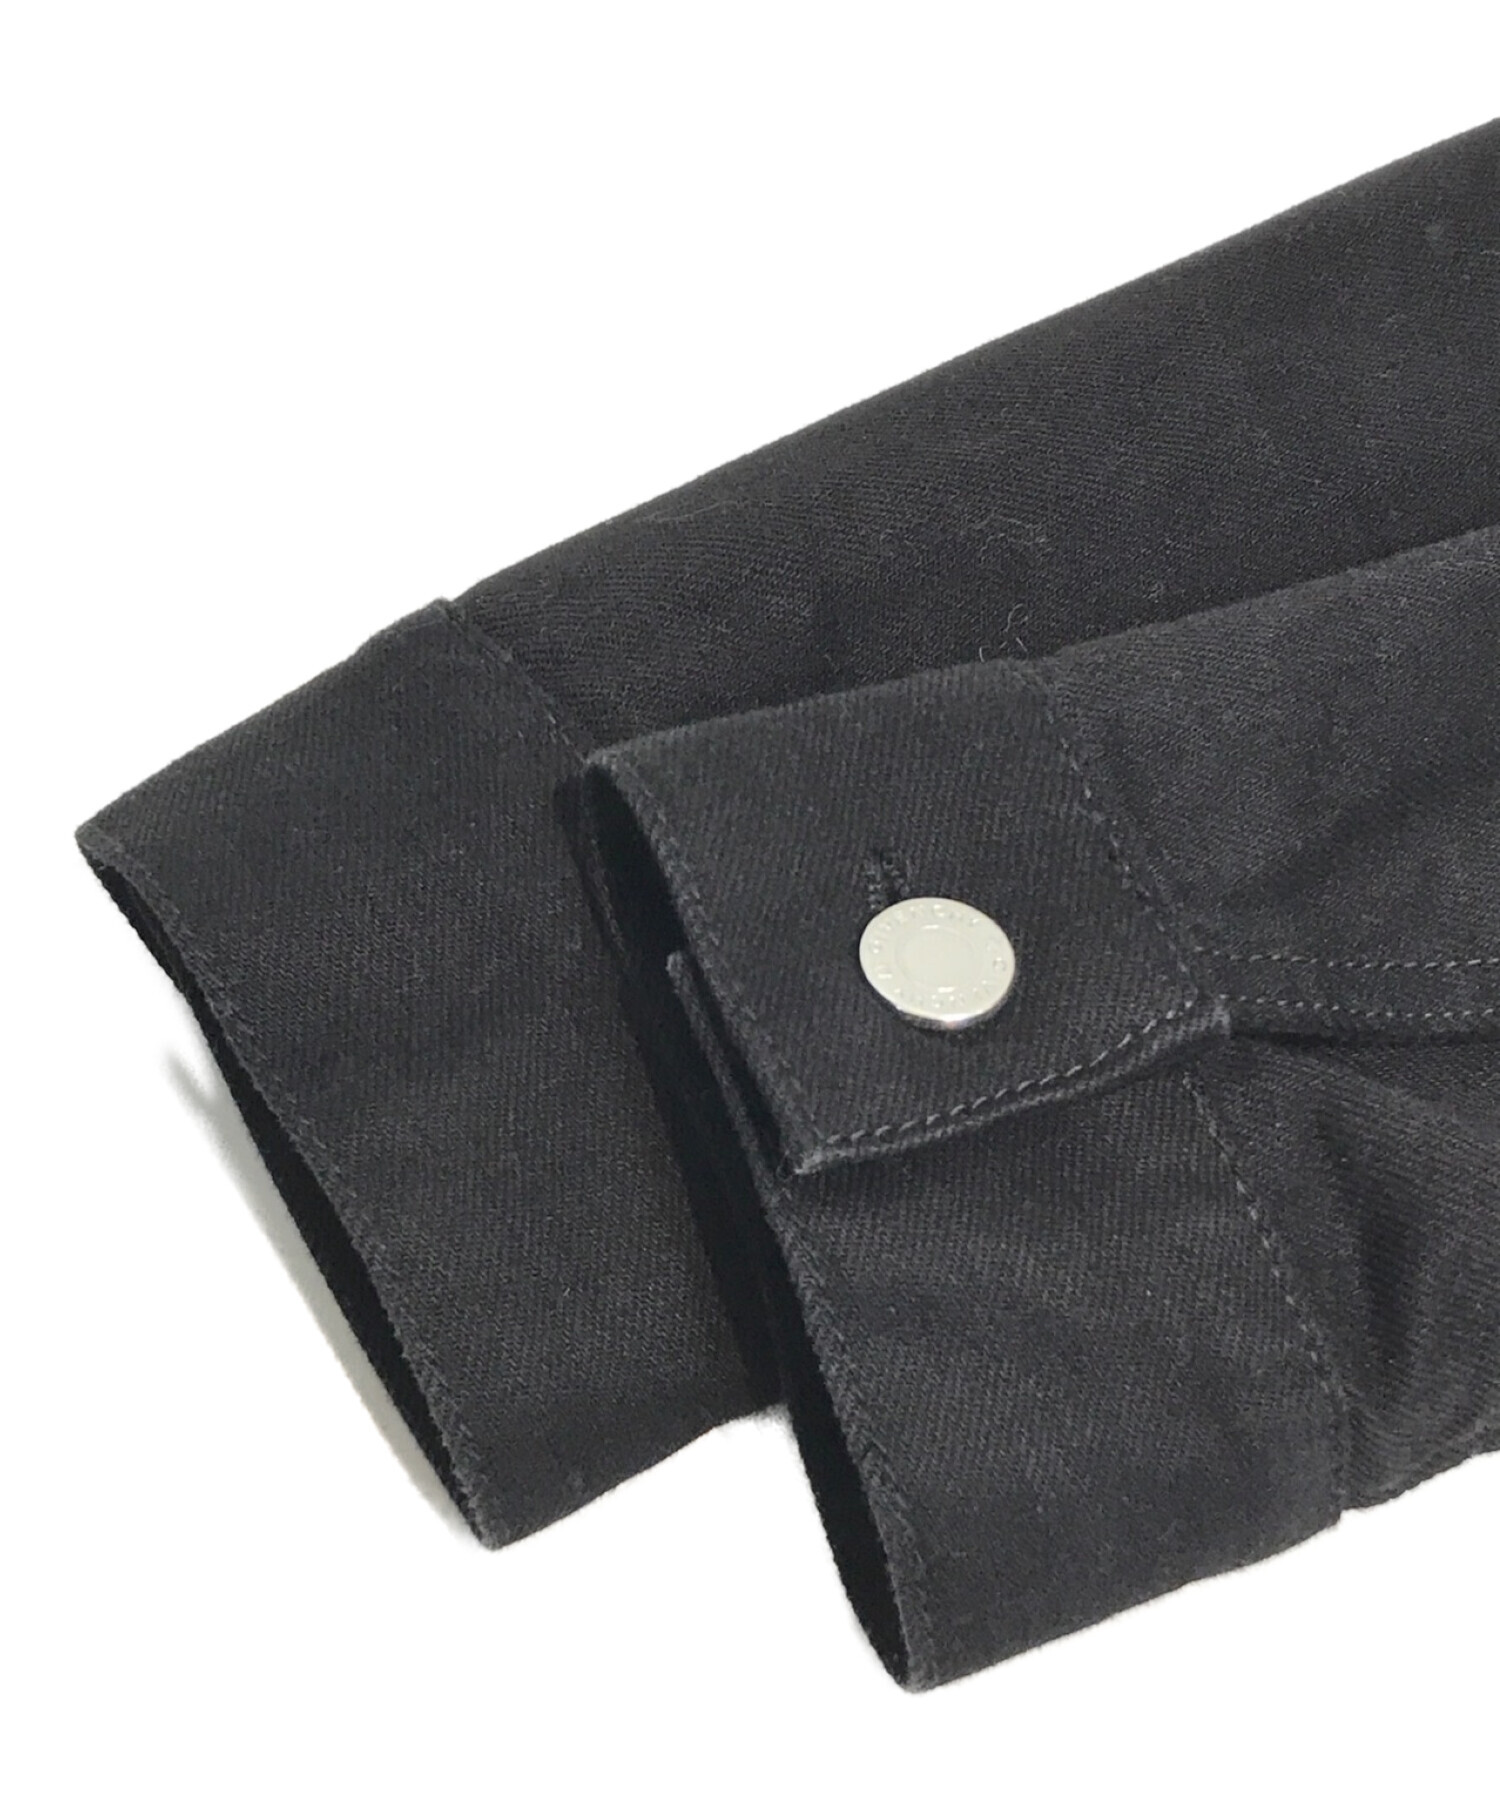 GIVENCHY (ジバンシィ) ロゴデストロイデニムジャケット ブラック サイズ:Ｓ